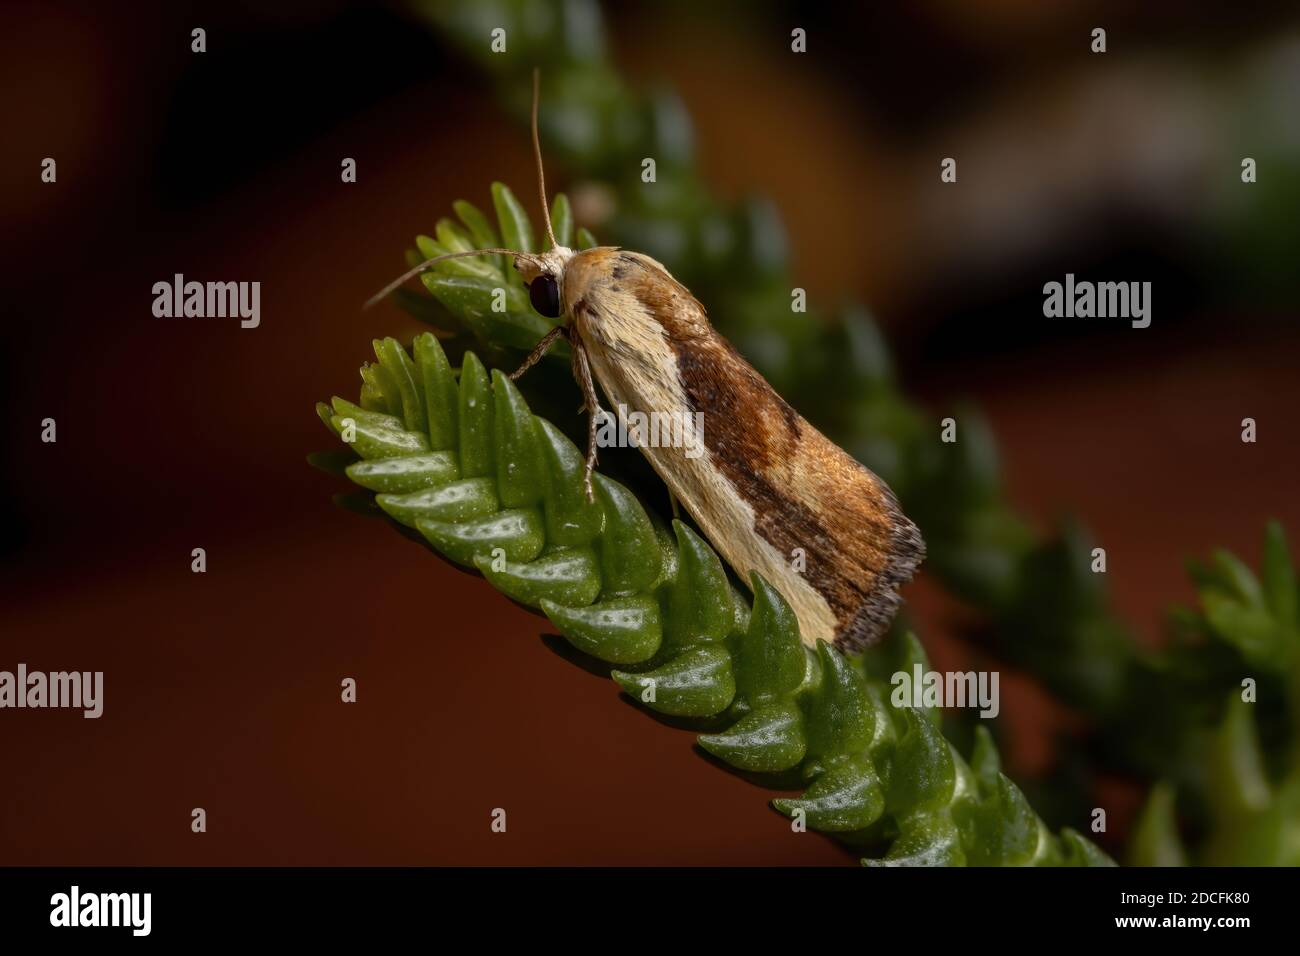 Bicolored Bird-dropping Moth of the species Ponometia exigua in a plant Stock Photo